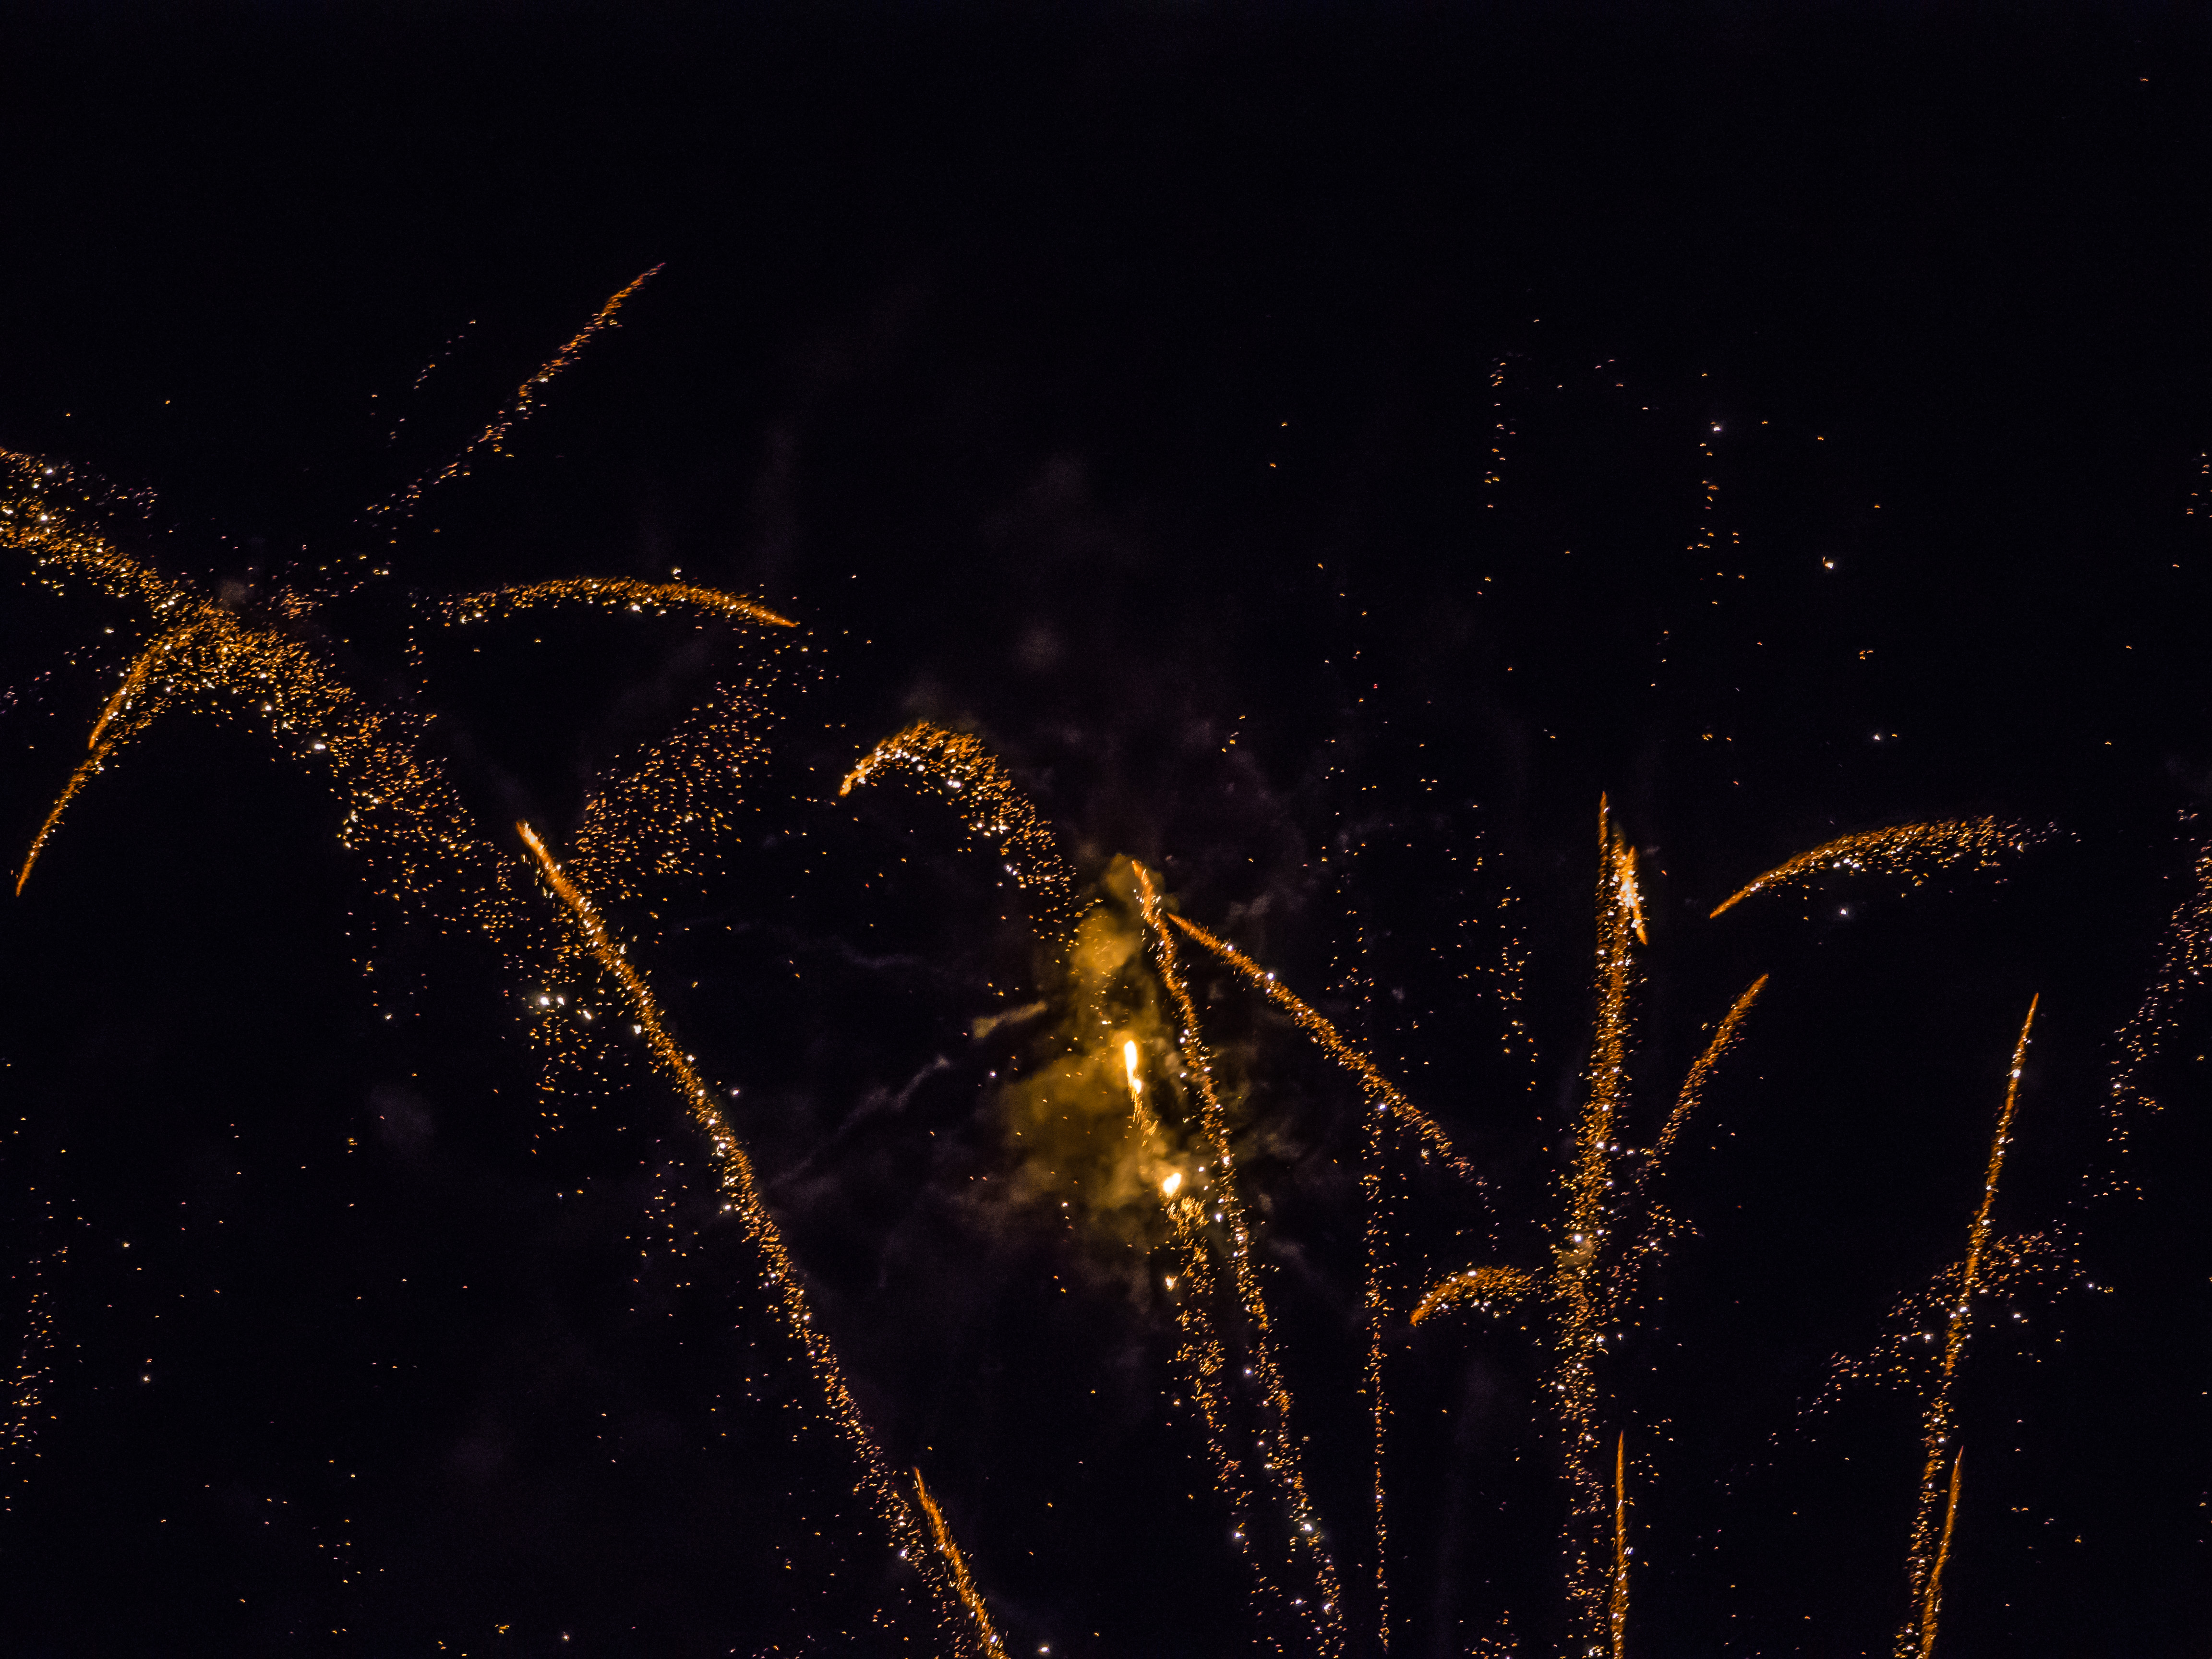 St cyprien pre bastille day fireworks at garrit-france-em10-20150713-p7130335.jpg photo